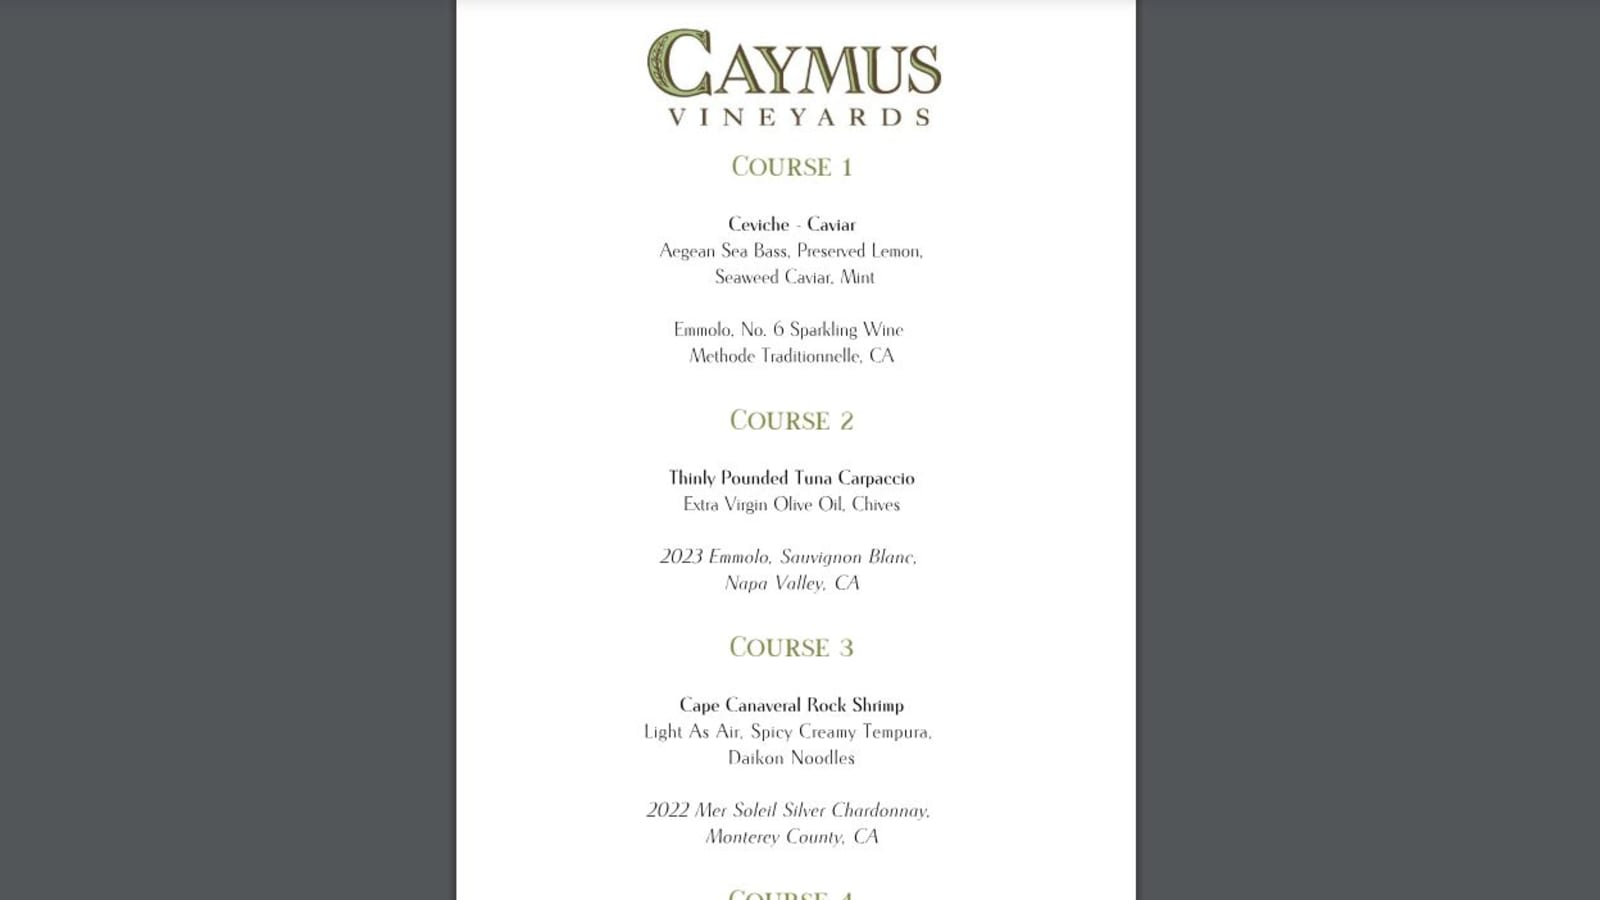 Atlanta Fish Market’s 2nd Annual Caymus Dinner